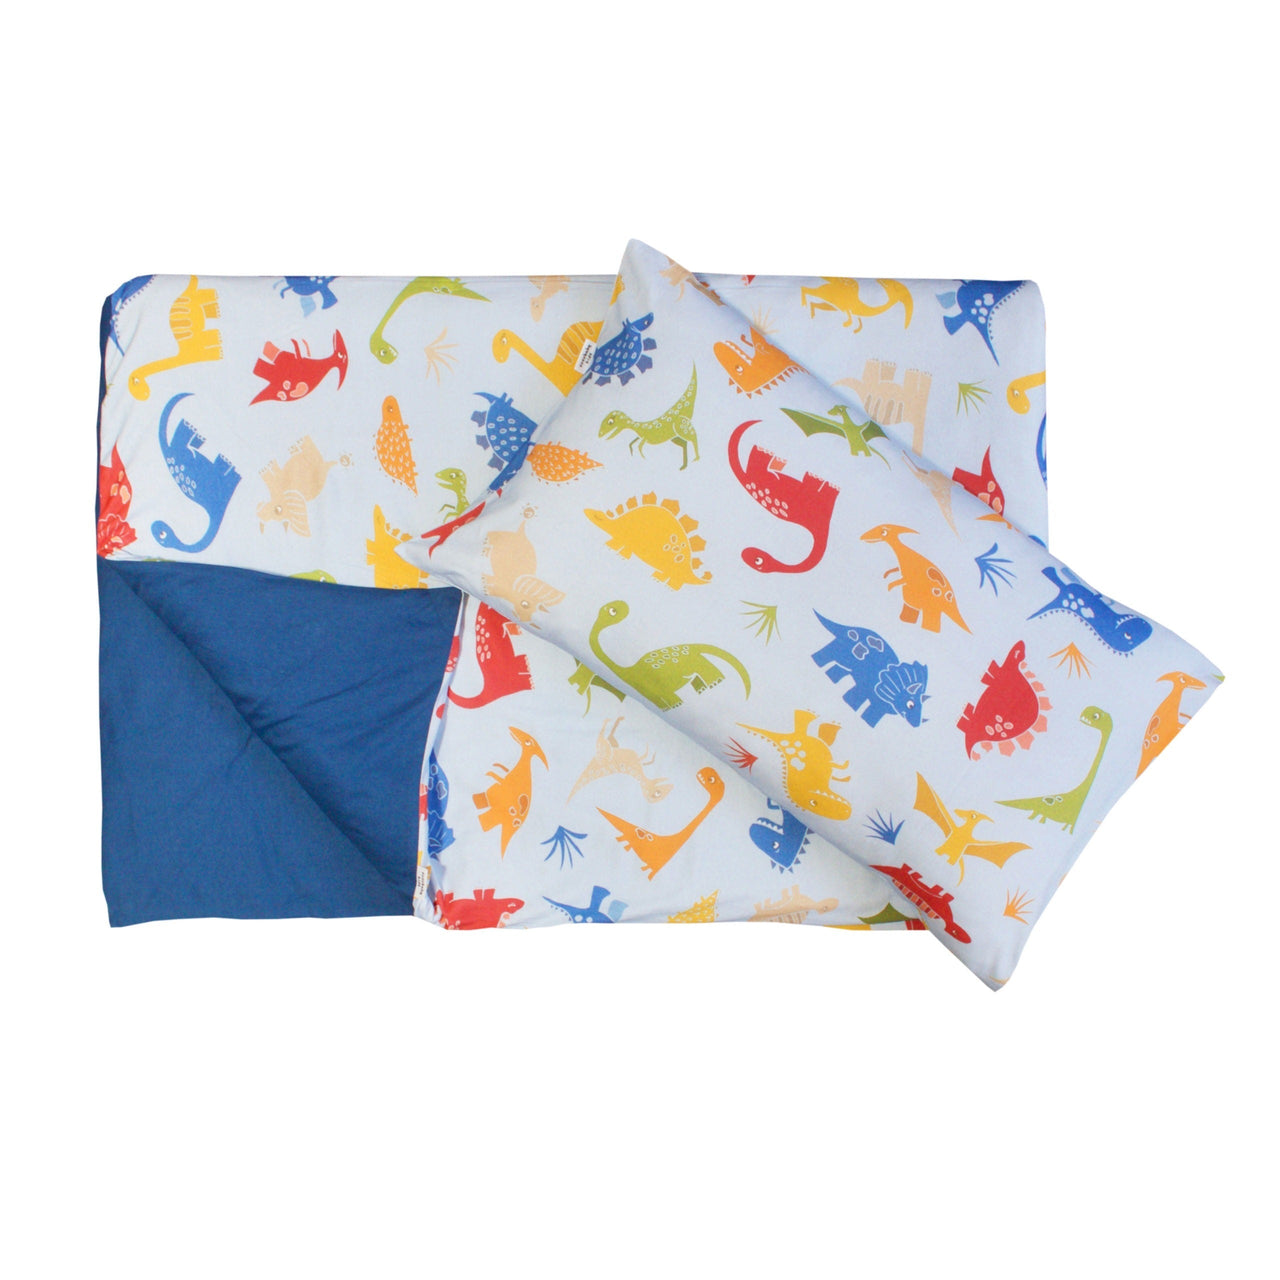 Duvet Cover and Pillowcase - Dino